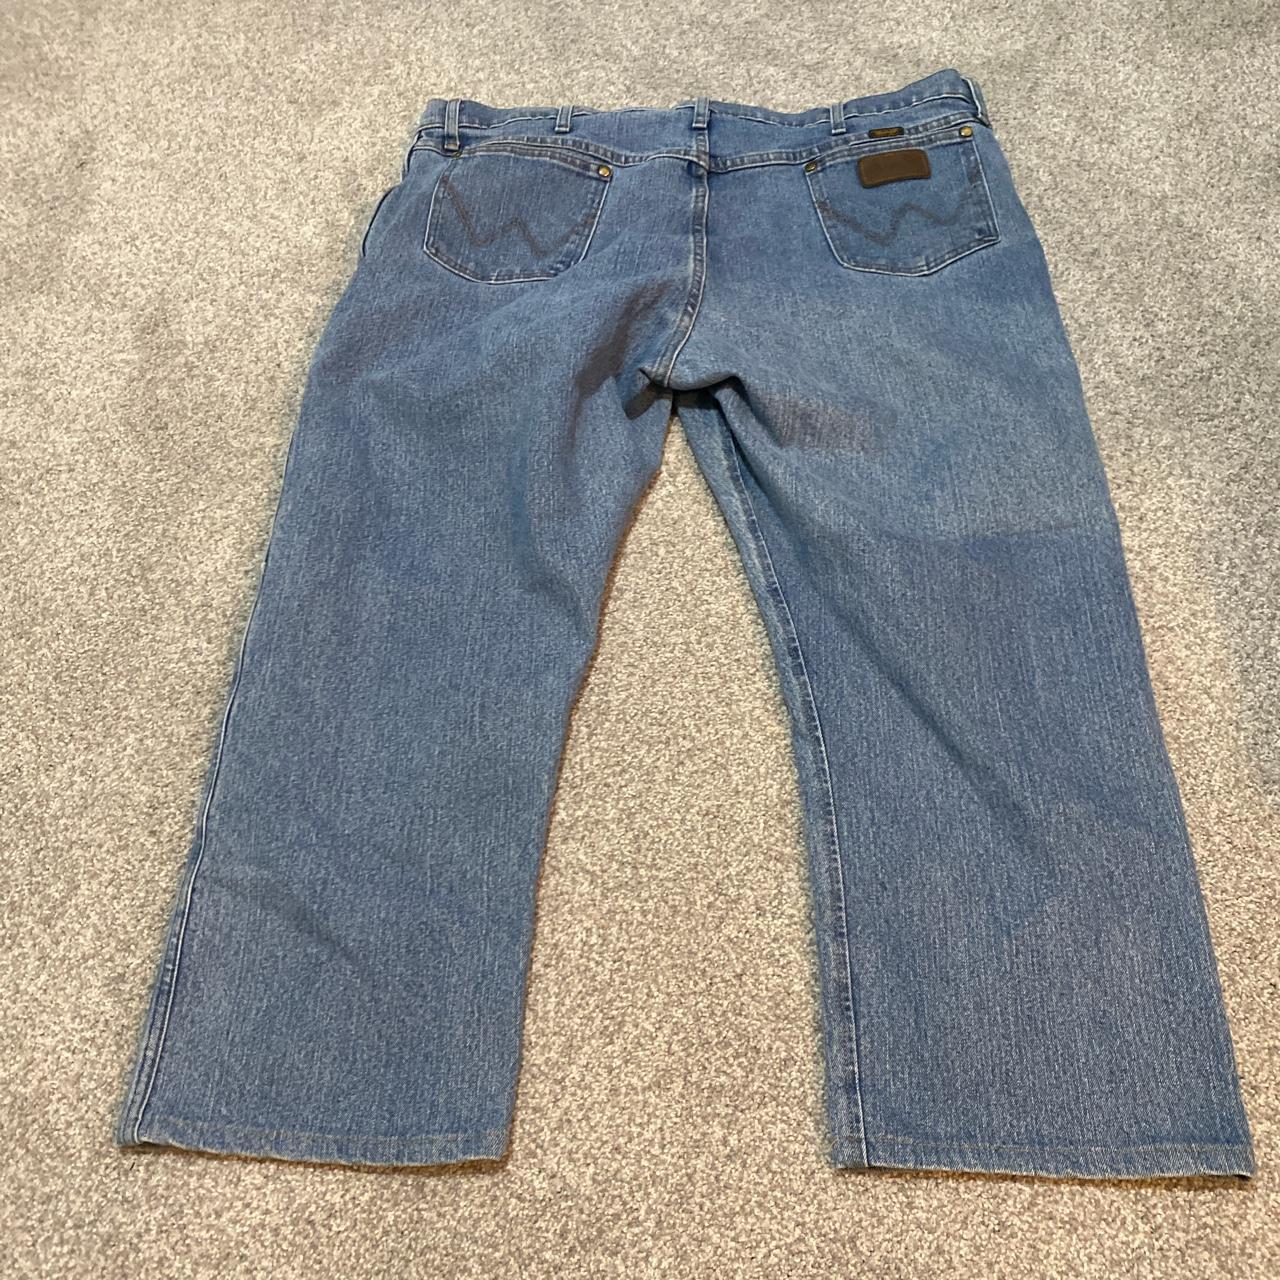 light blue wrangler jeans size 44x30 if you have... - Depop